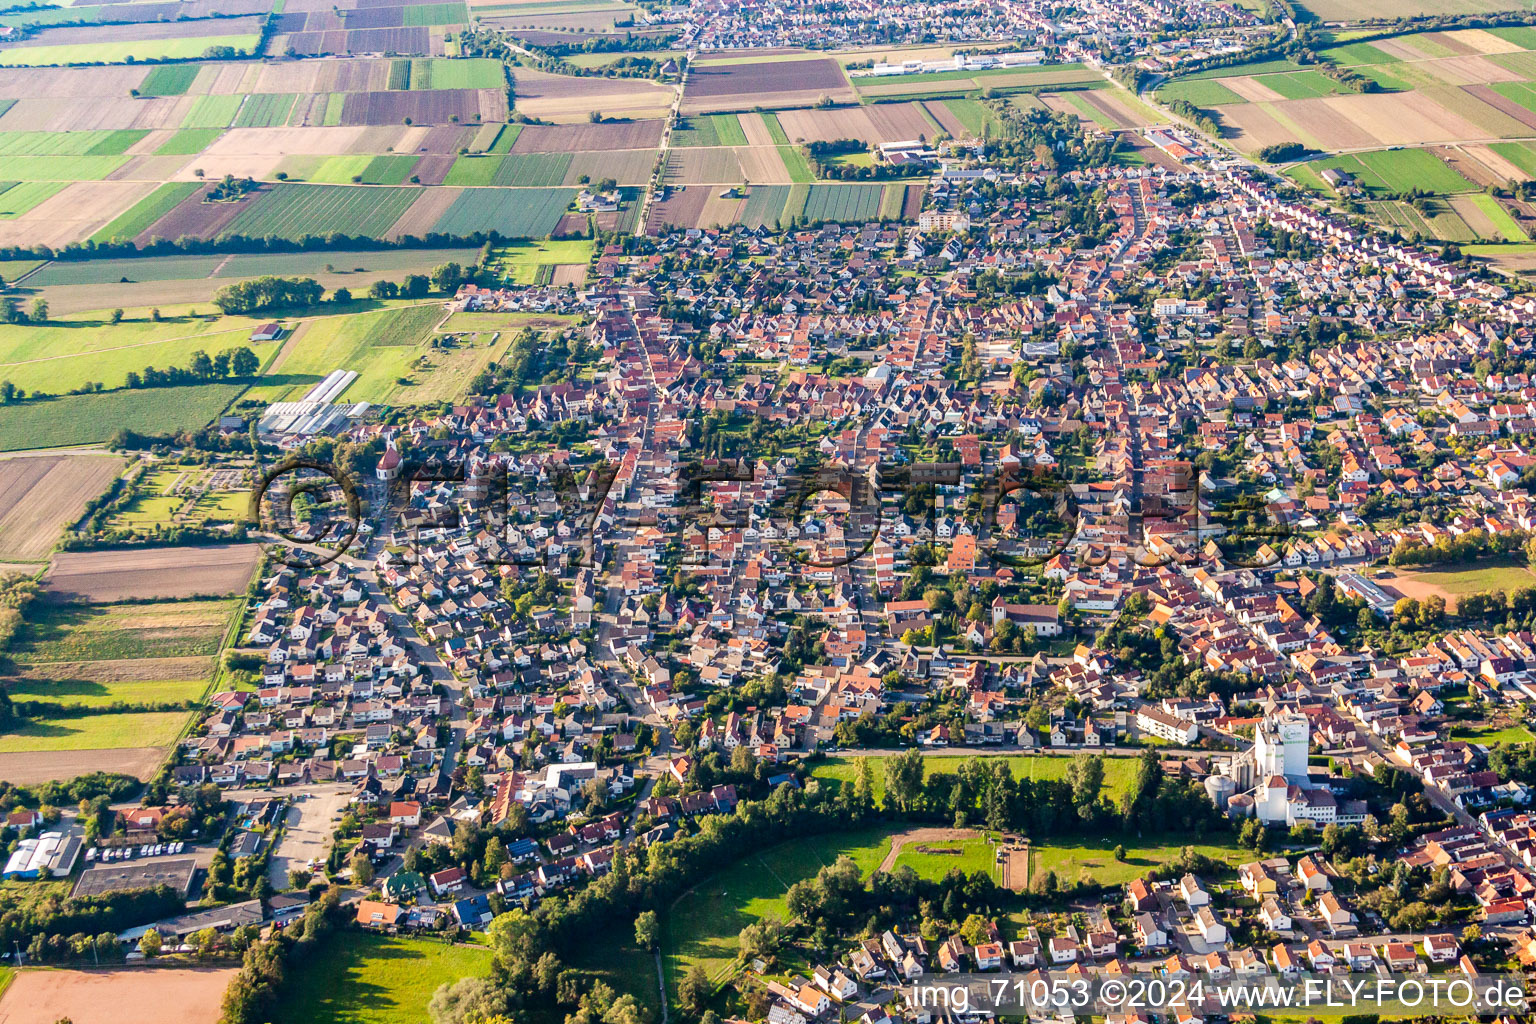 District Iggelheim in Böhl-Iggelheim in the state Rhineland-Palatinate, Germany viewn from the air